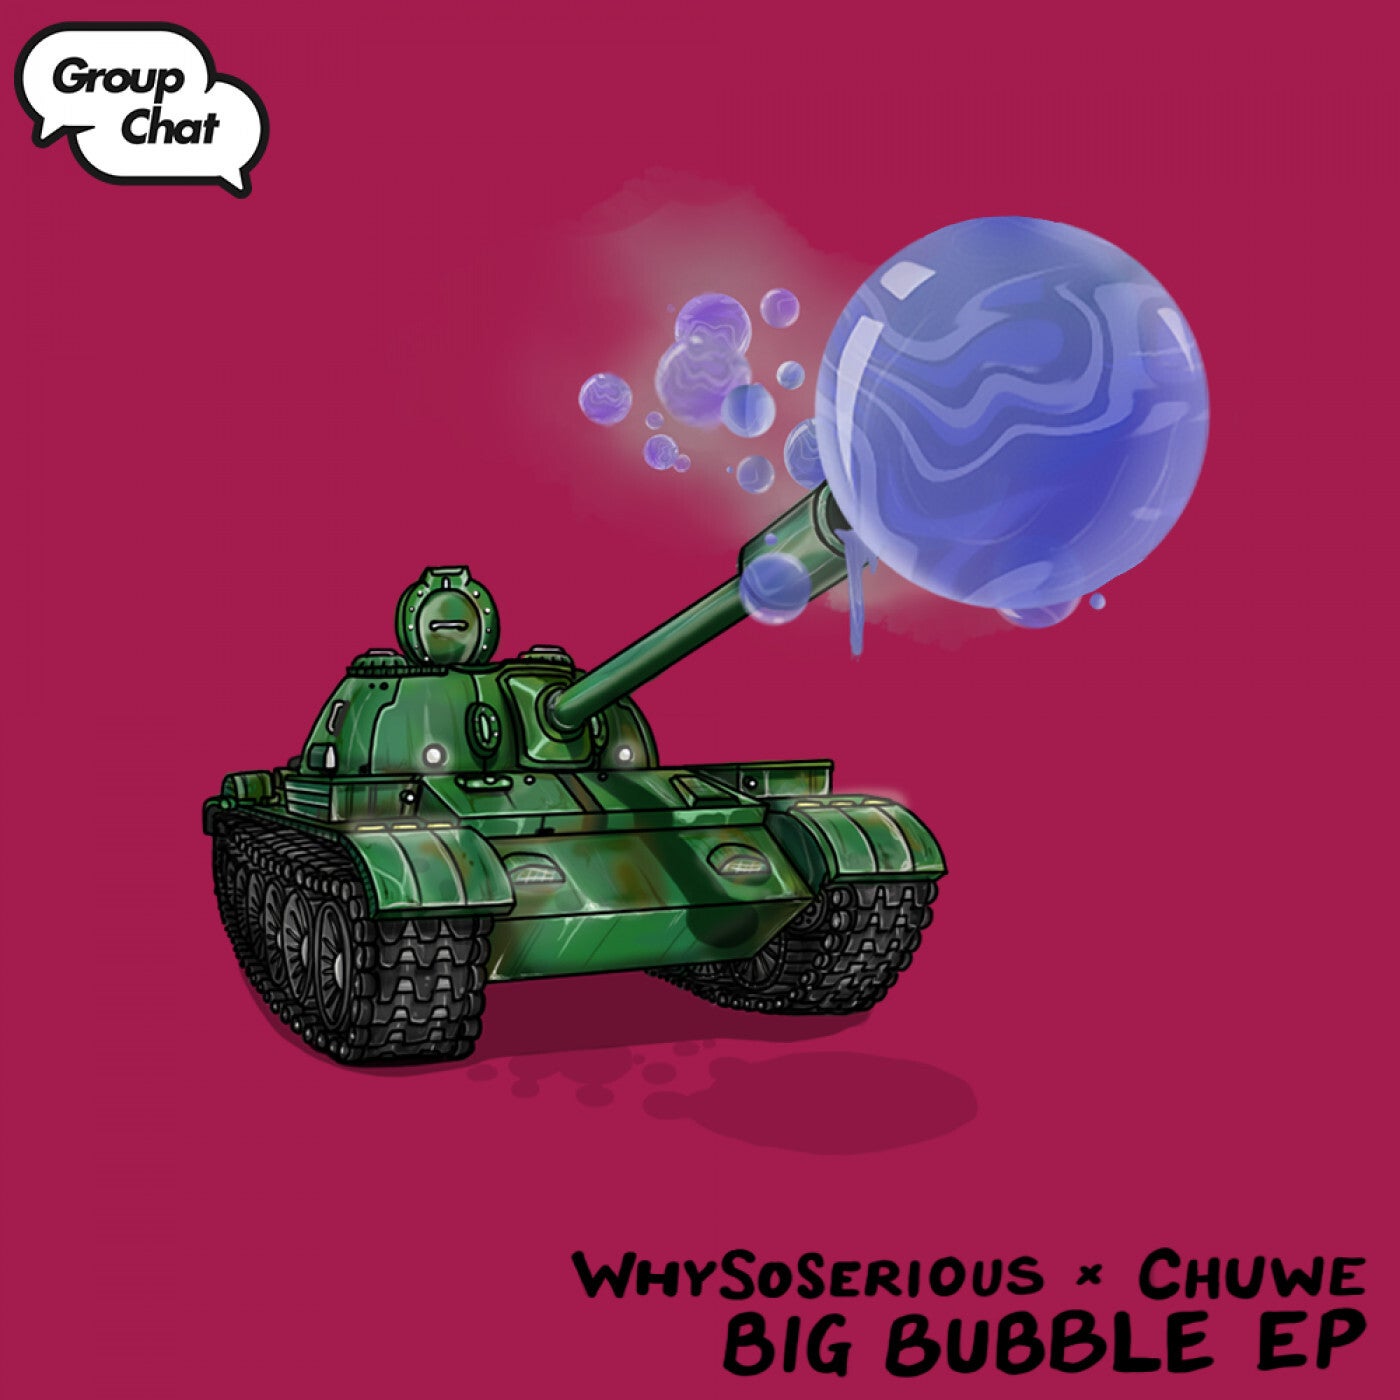 Big Bubble EP